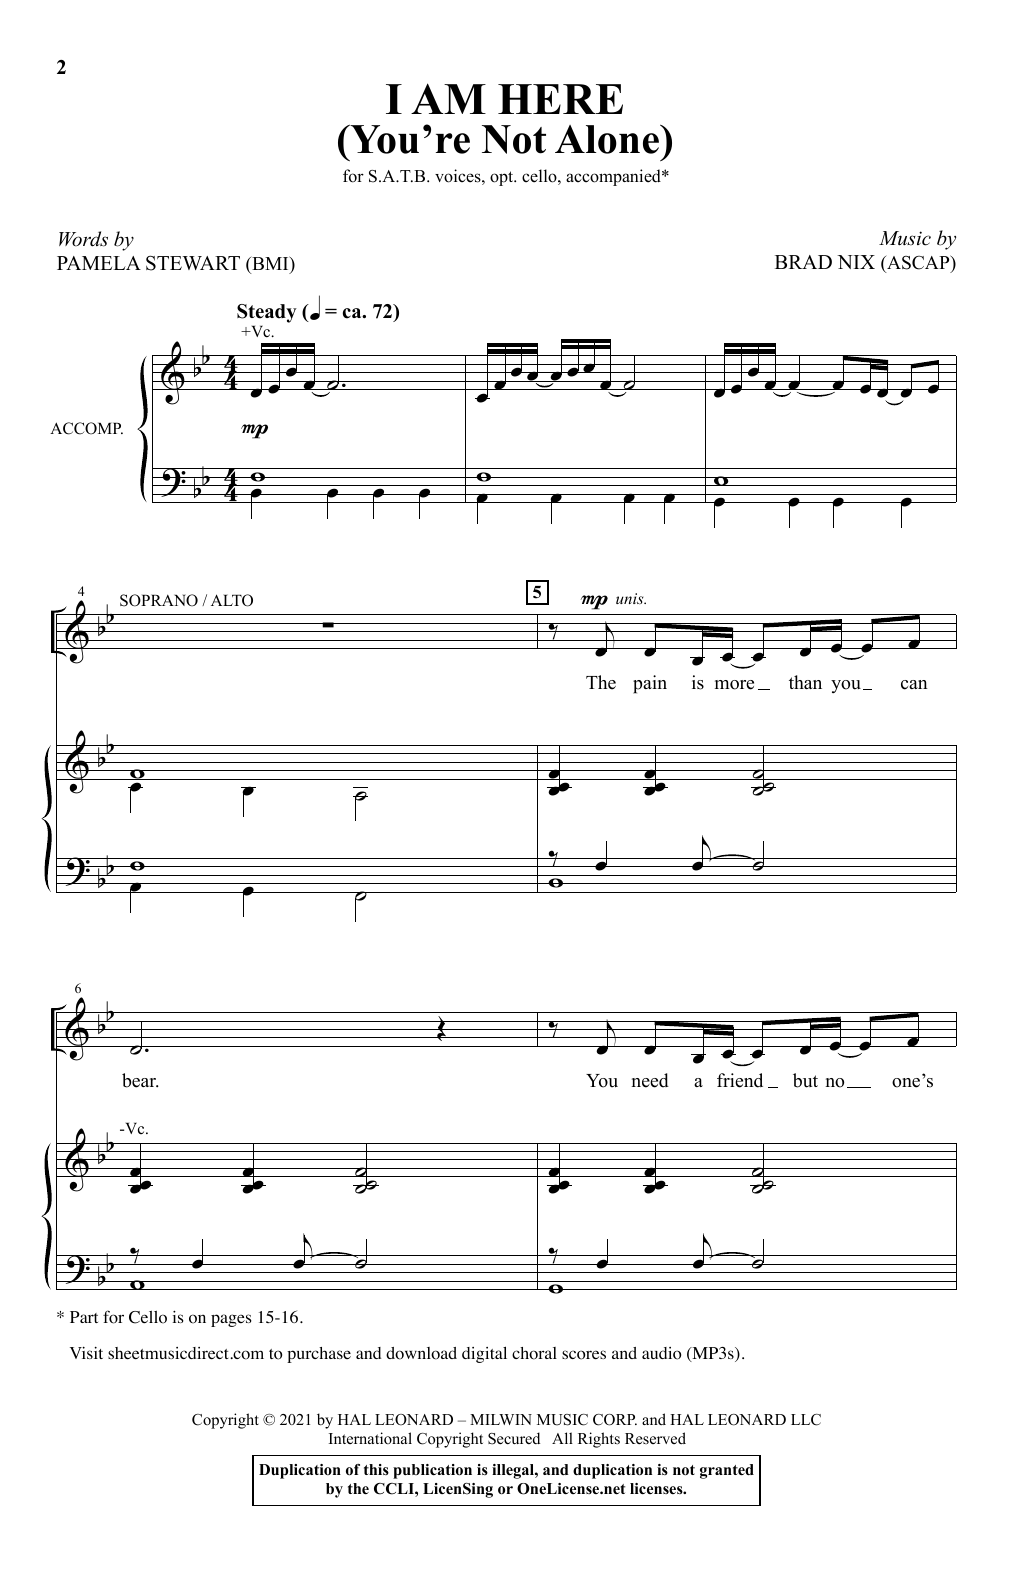 Pamela Stewart & Brad Nix I Am Here (You're Not Alone) Sheet Music Notes & Chords for SATB Choir - Download or Print PDF